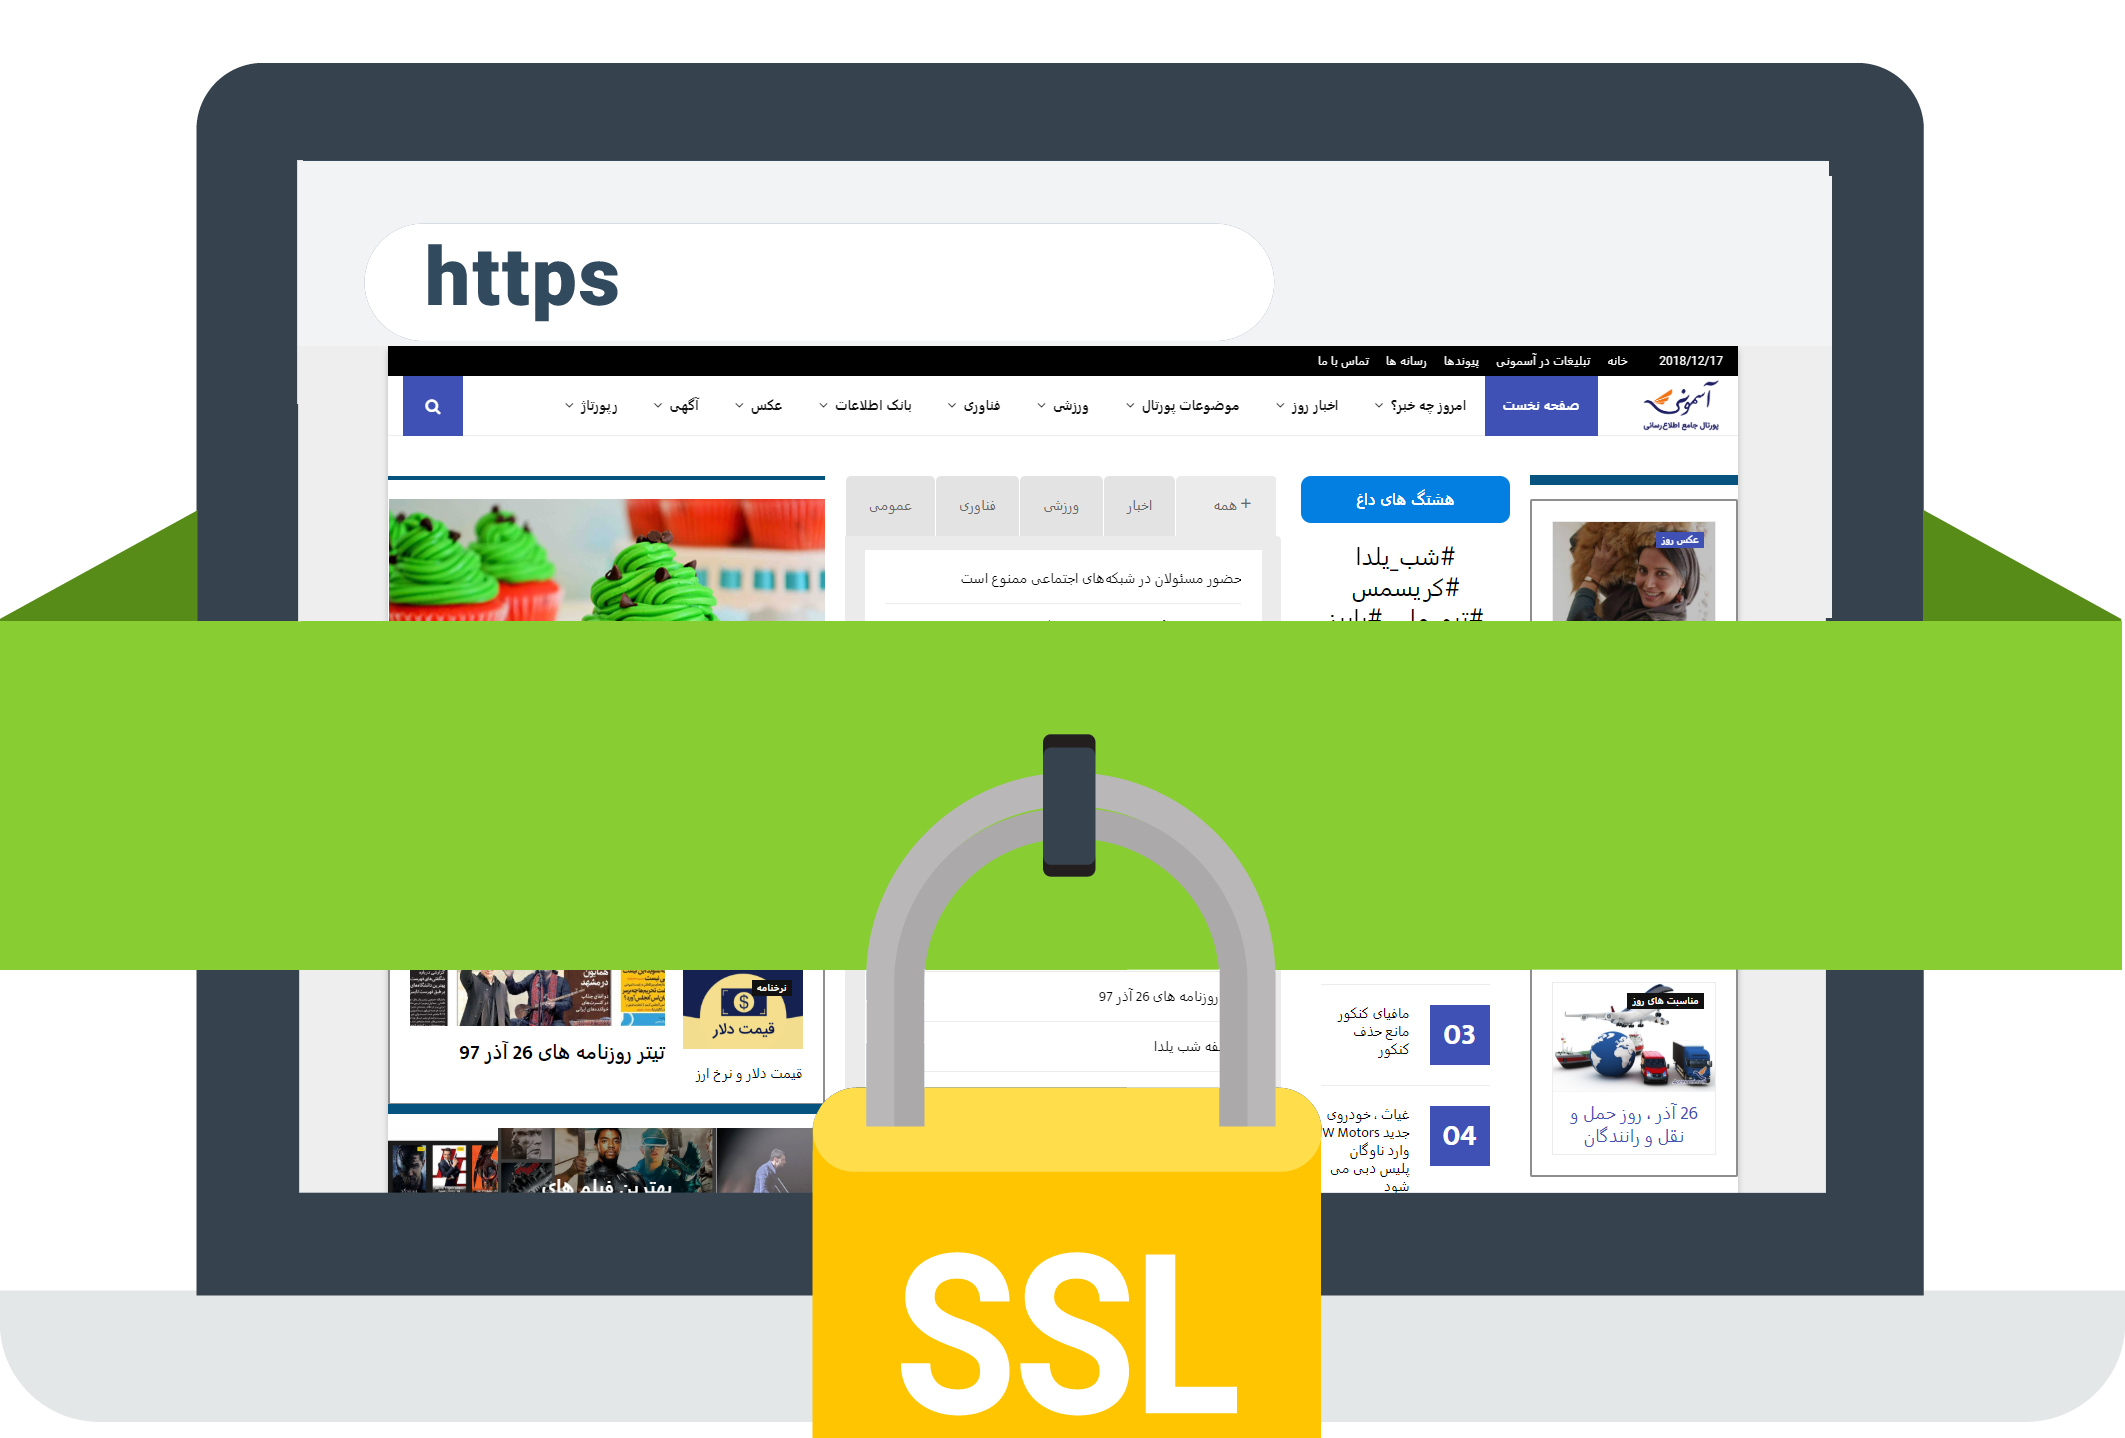 پروتکل امن SSL در پورتال آسمونی فعال شد